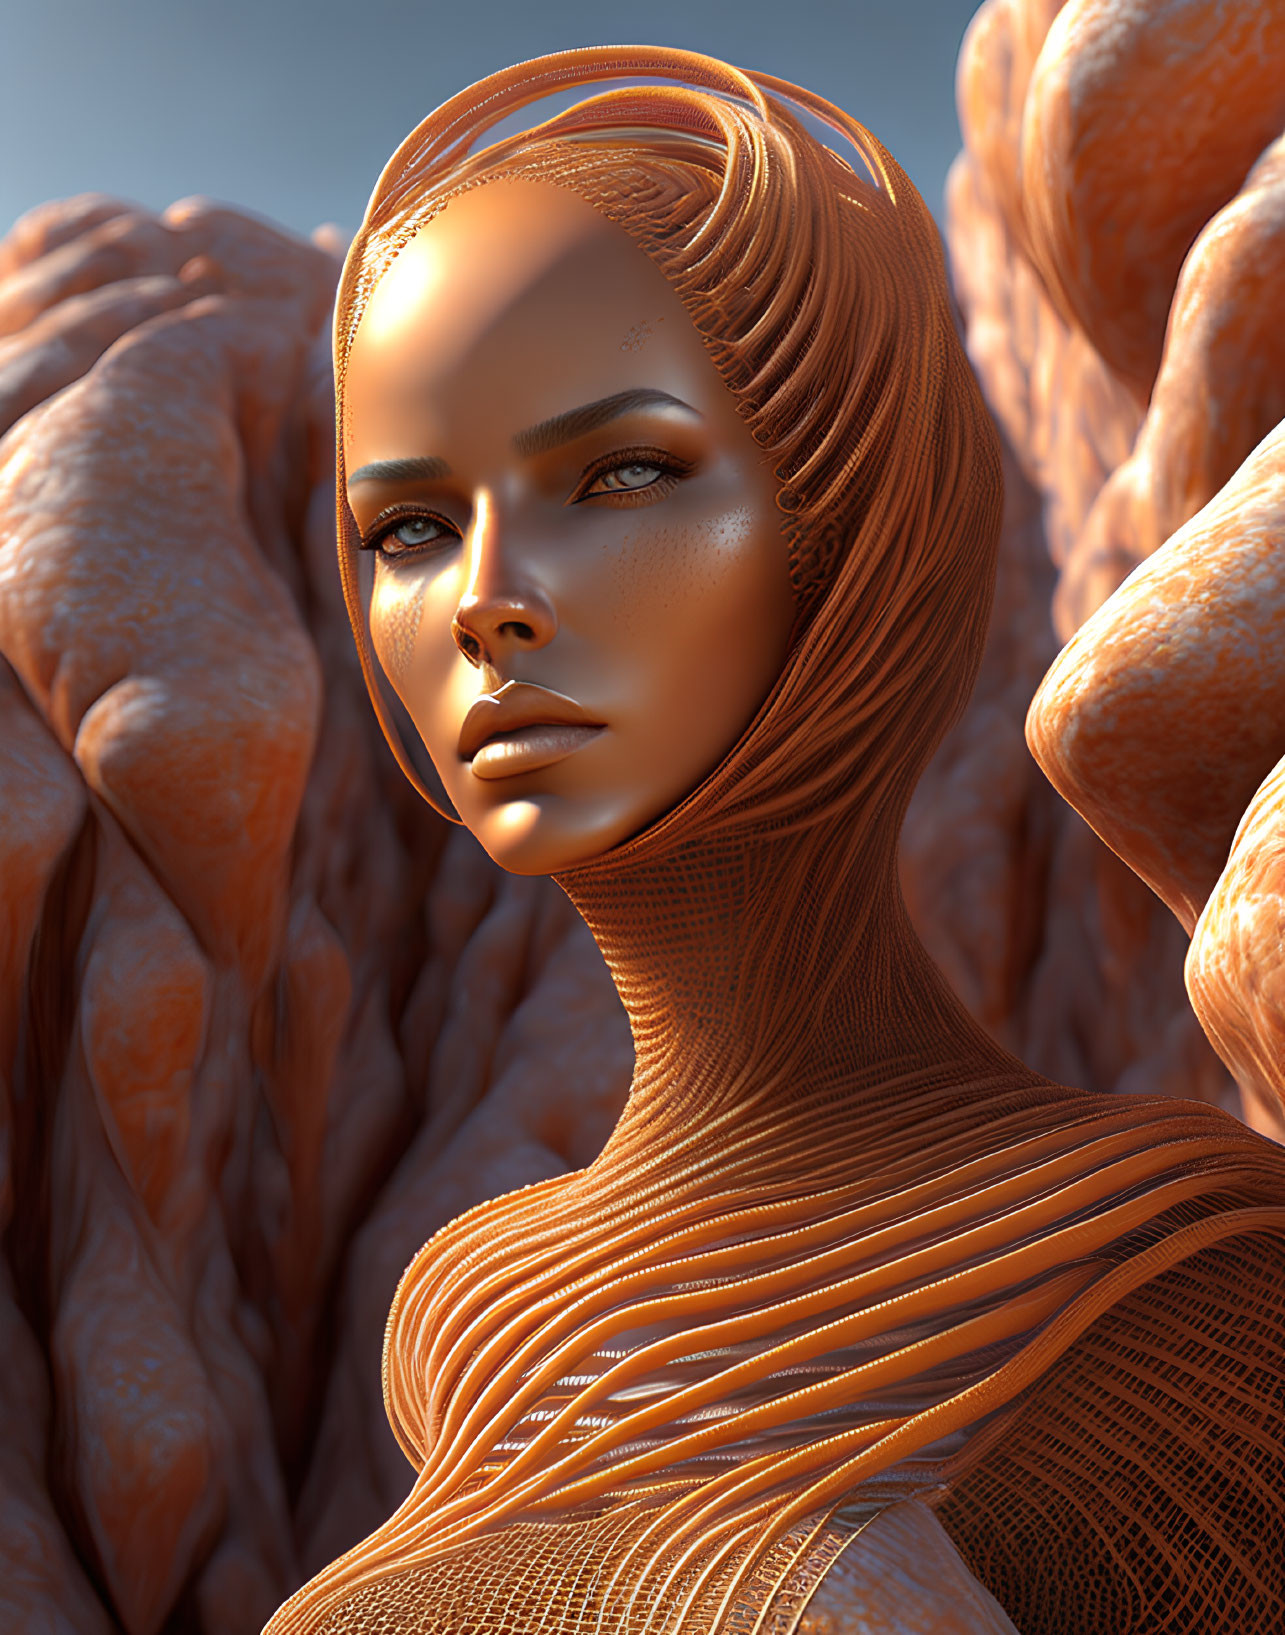 Futuristic digital artwork of female figure with orange texture skin